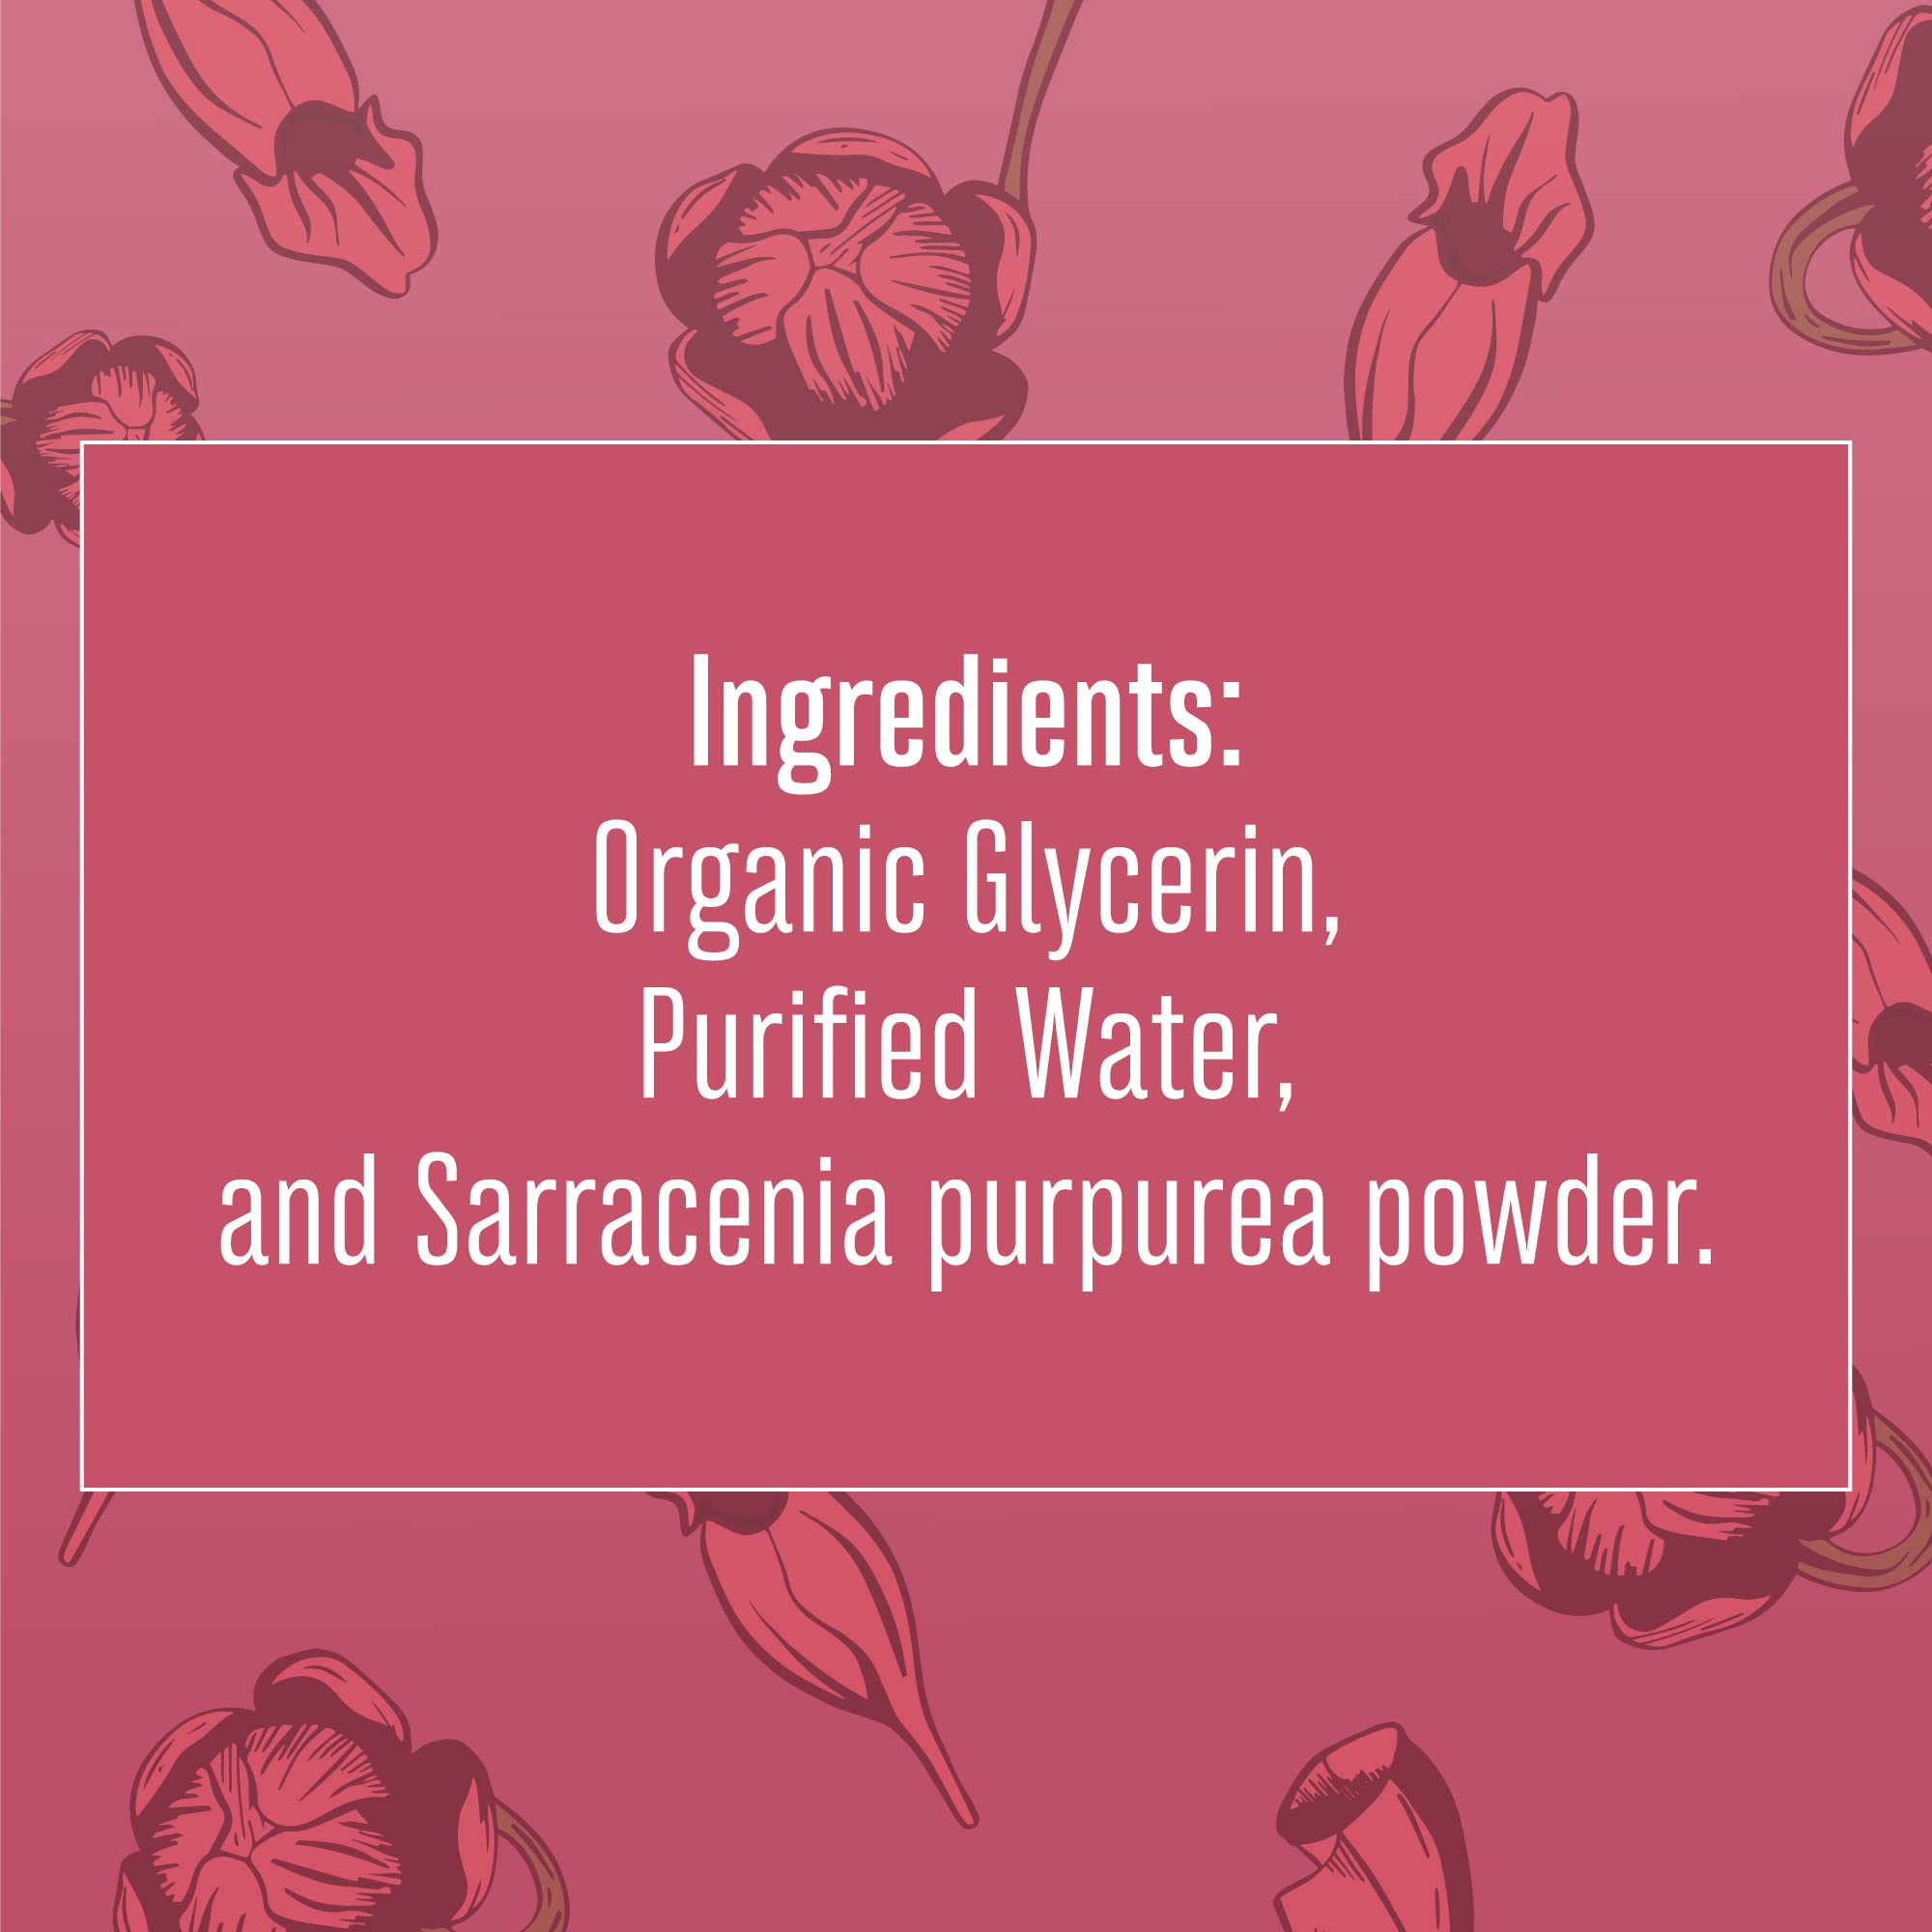 MaryRuth Organics Sarracenia Purpurea Liquid | Sarracenia Purpurea Topical Herbal Liquid | Purple Pitcher Plant | Vegan | Non-GMO | Gluten Free | 2 Fl Oz